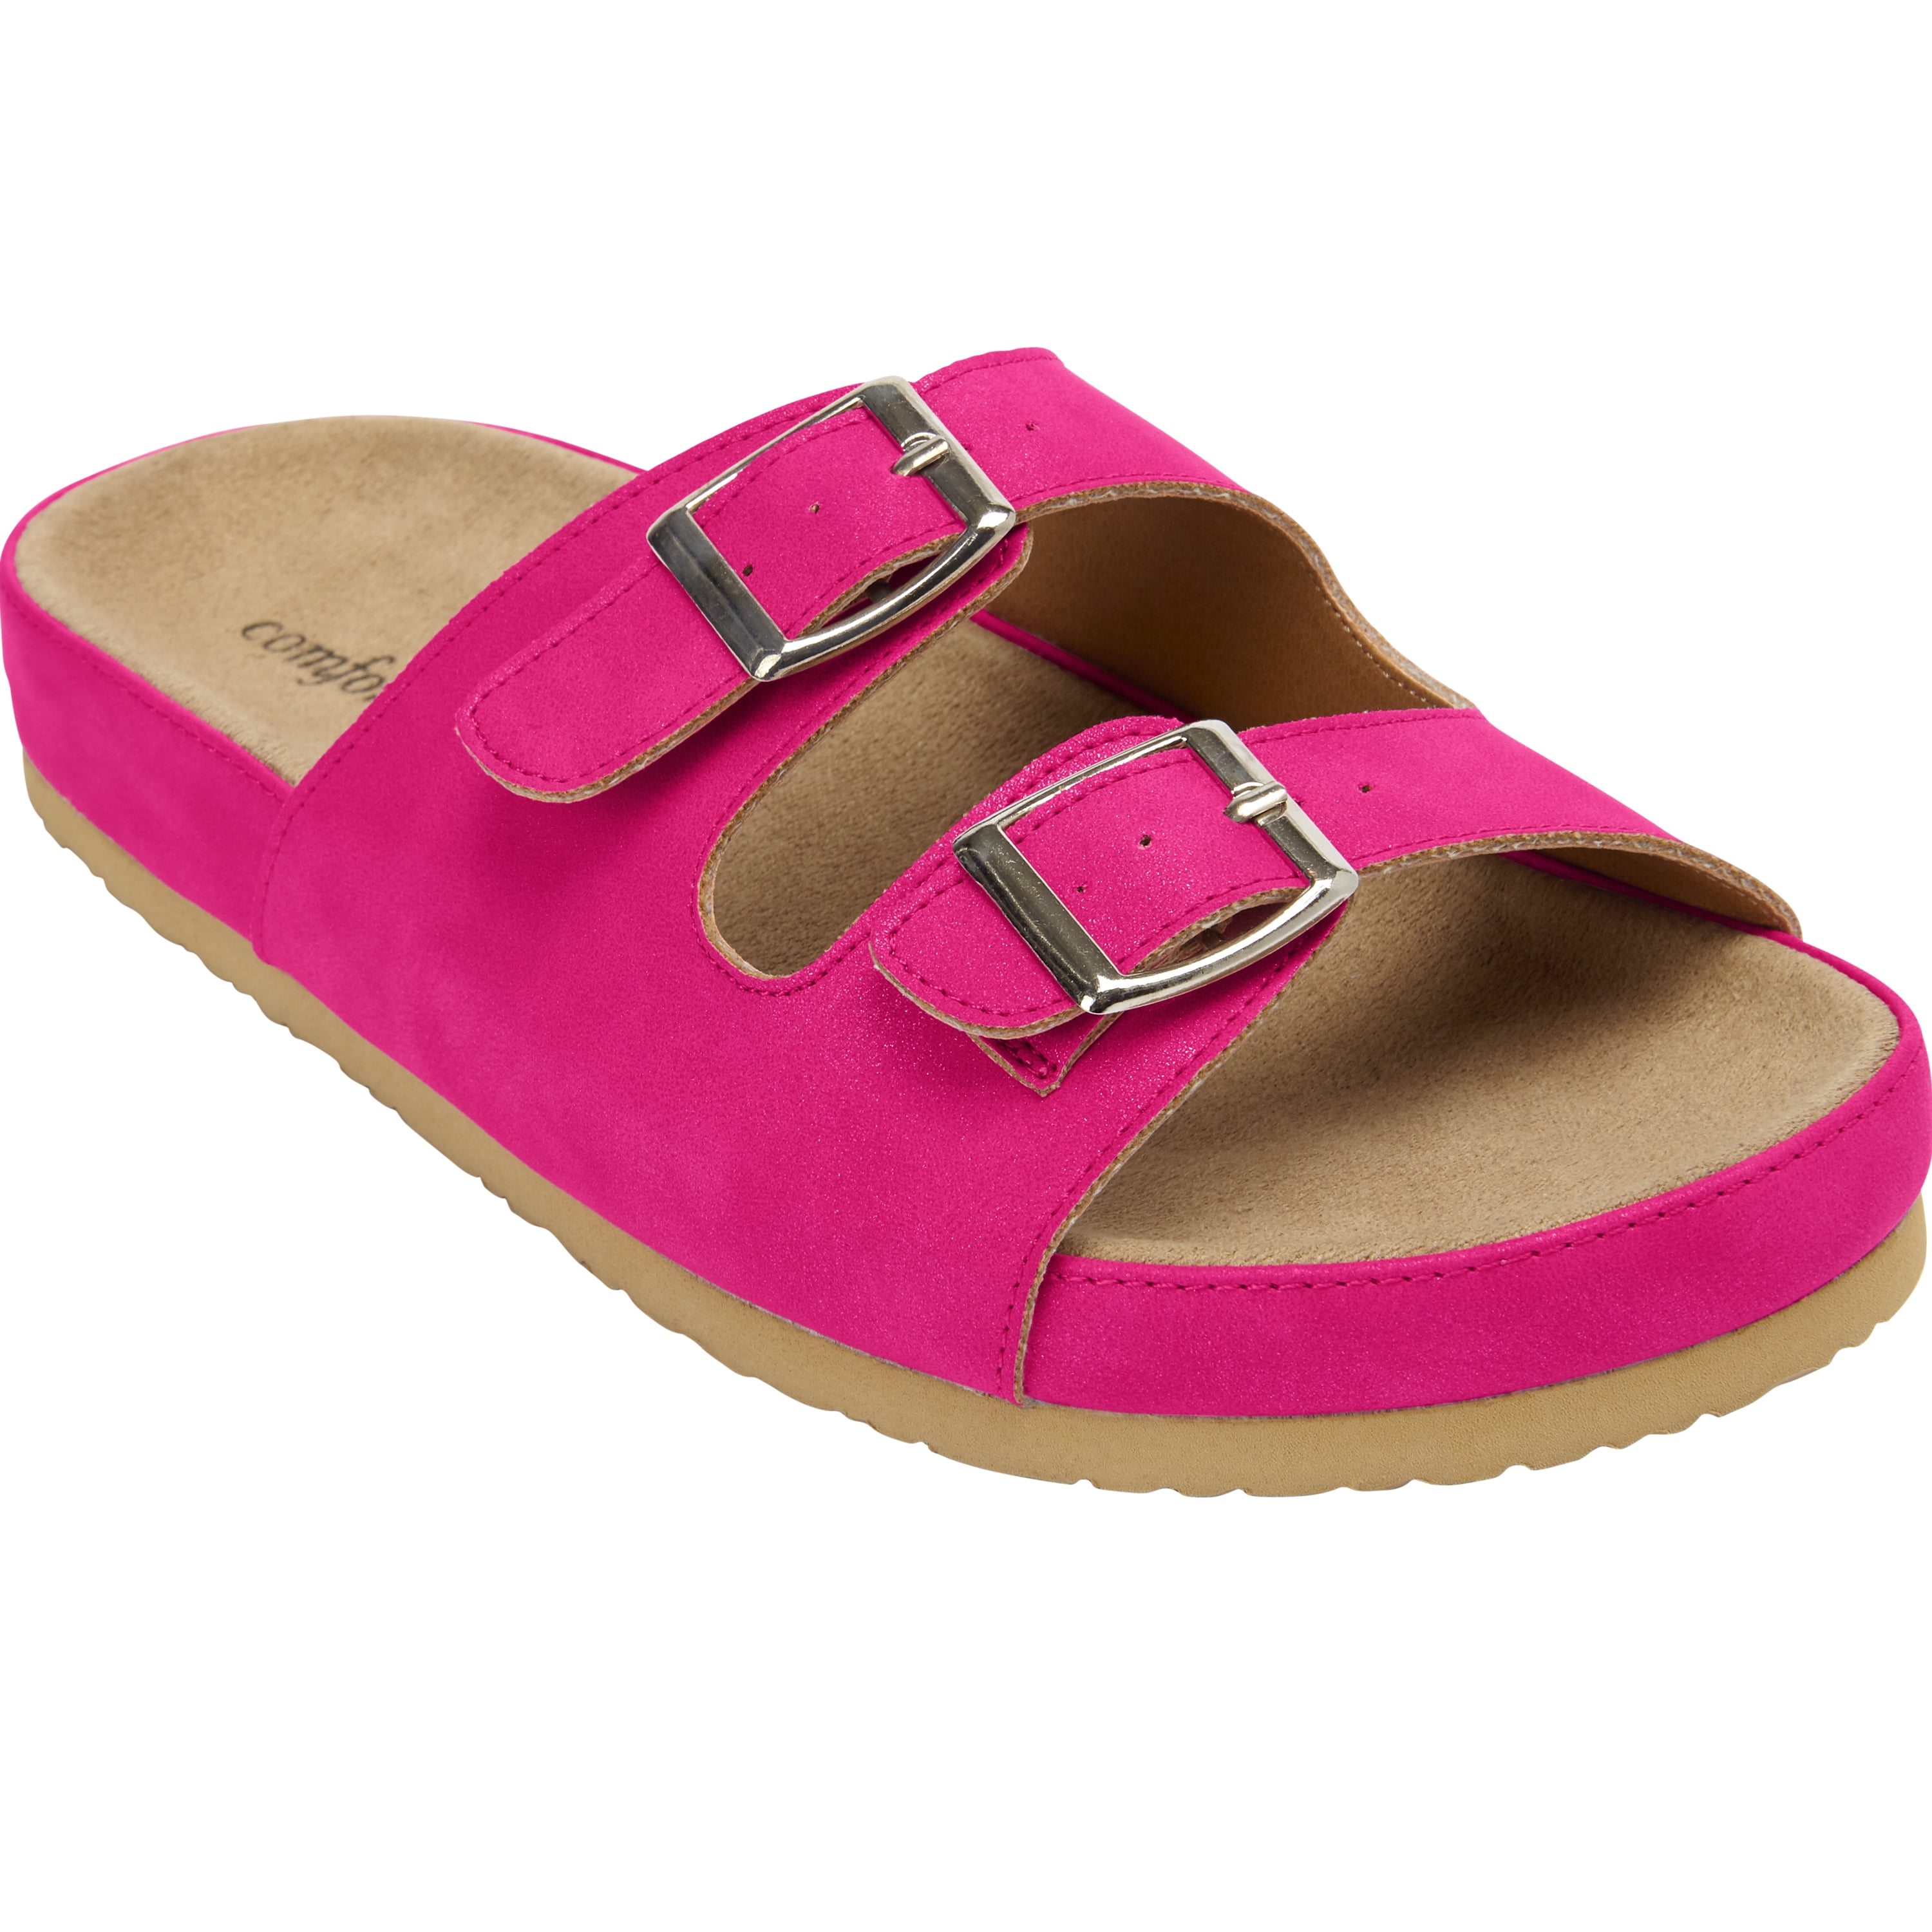 pink wide width sandals